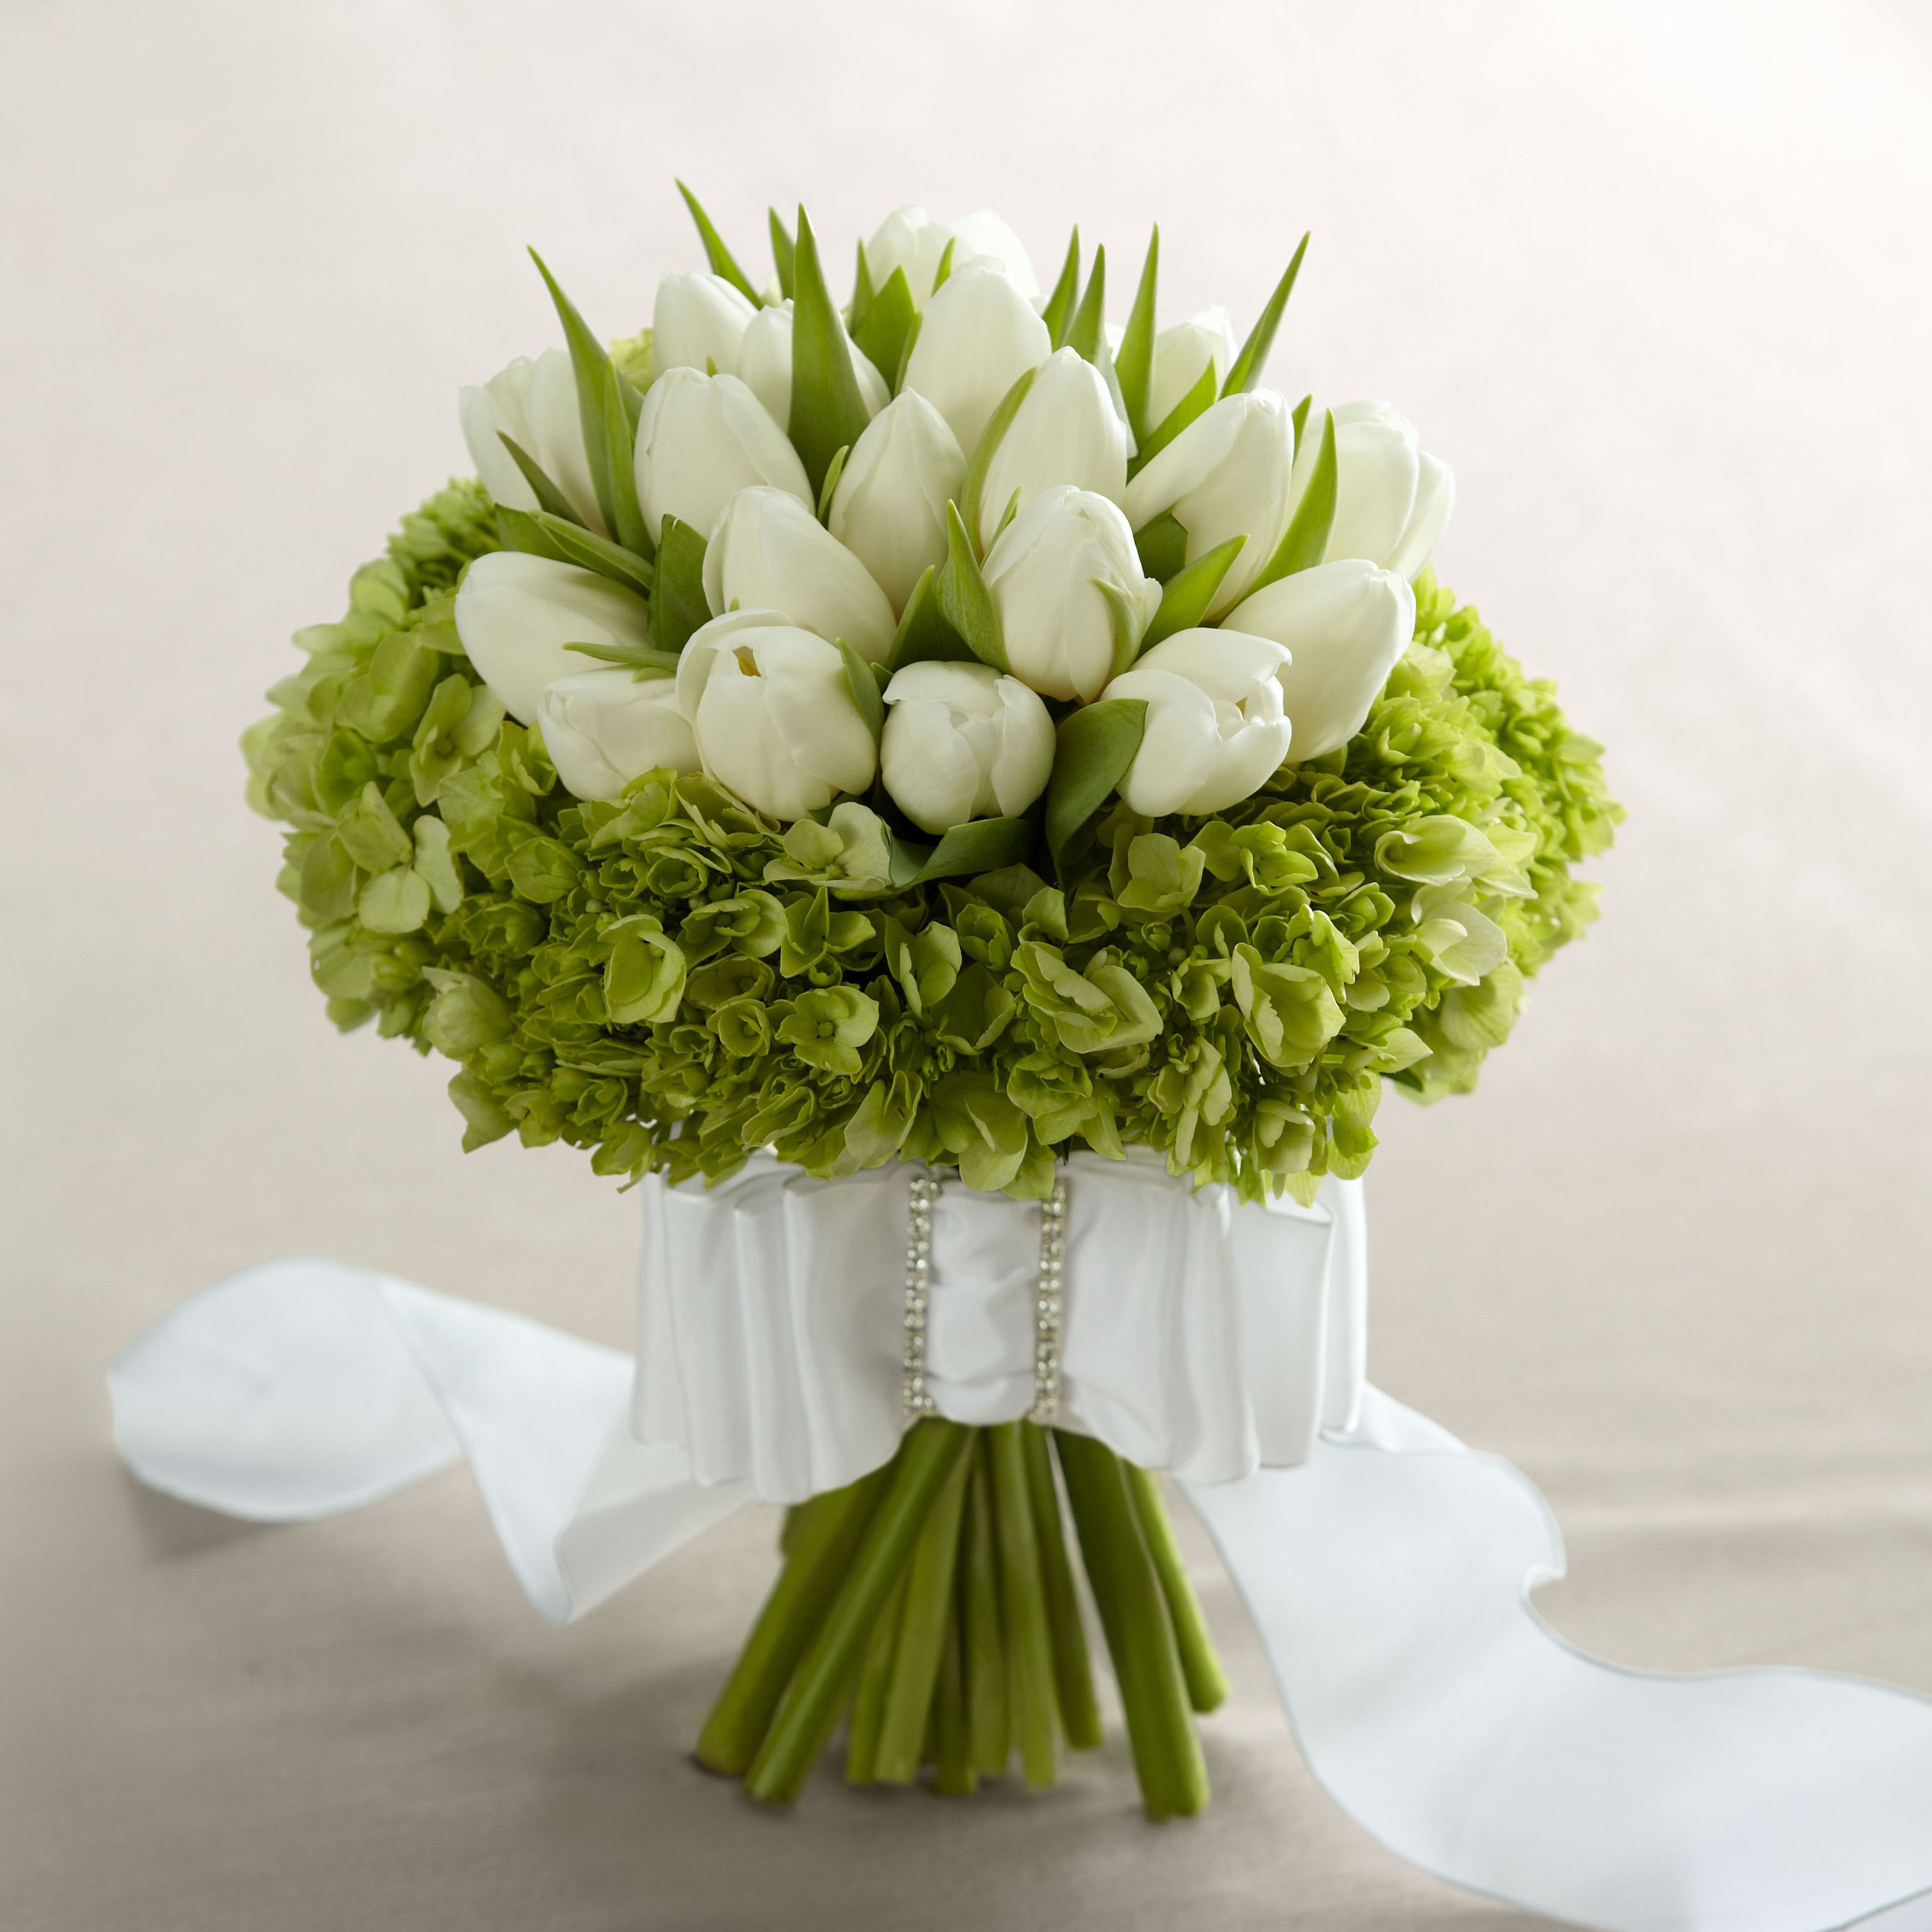 Tulip Flower Arrangements For Weddings | HD Wallpapers ...